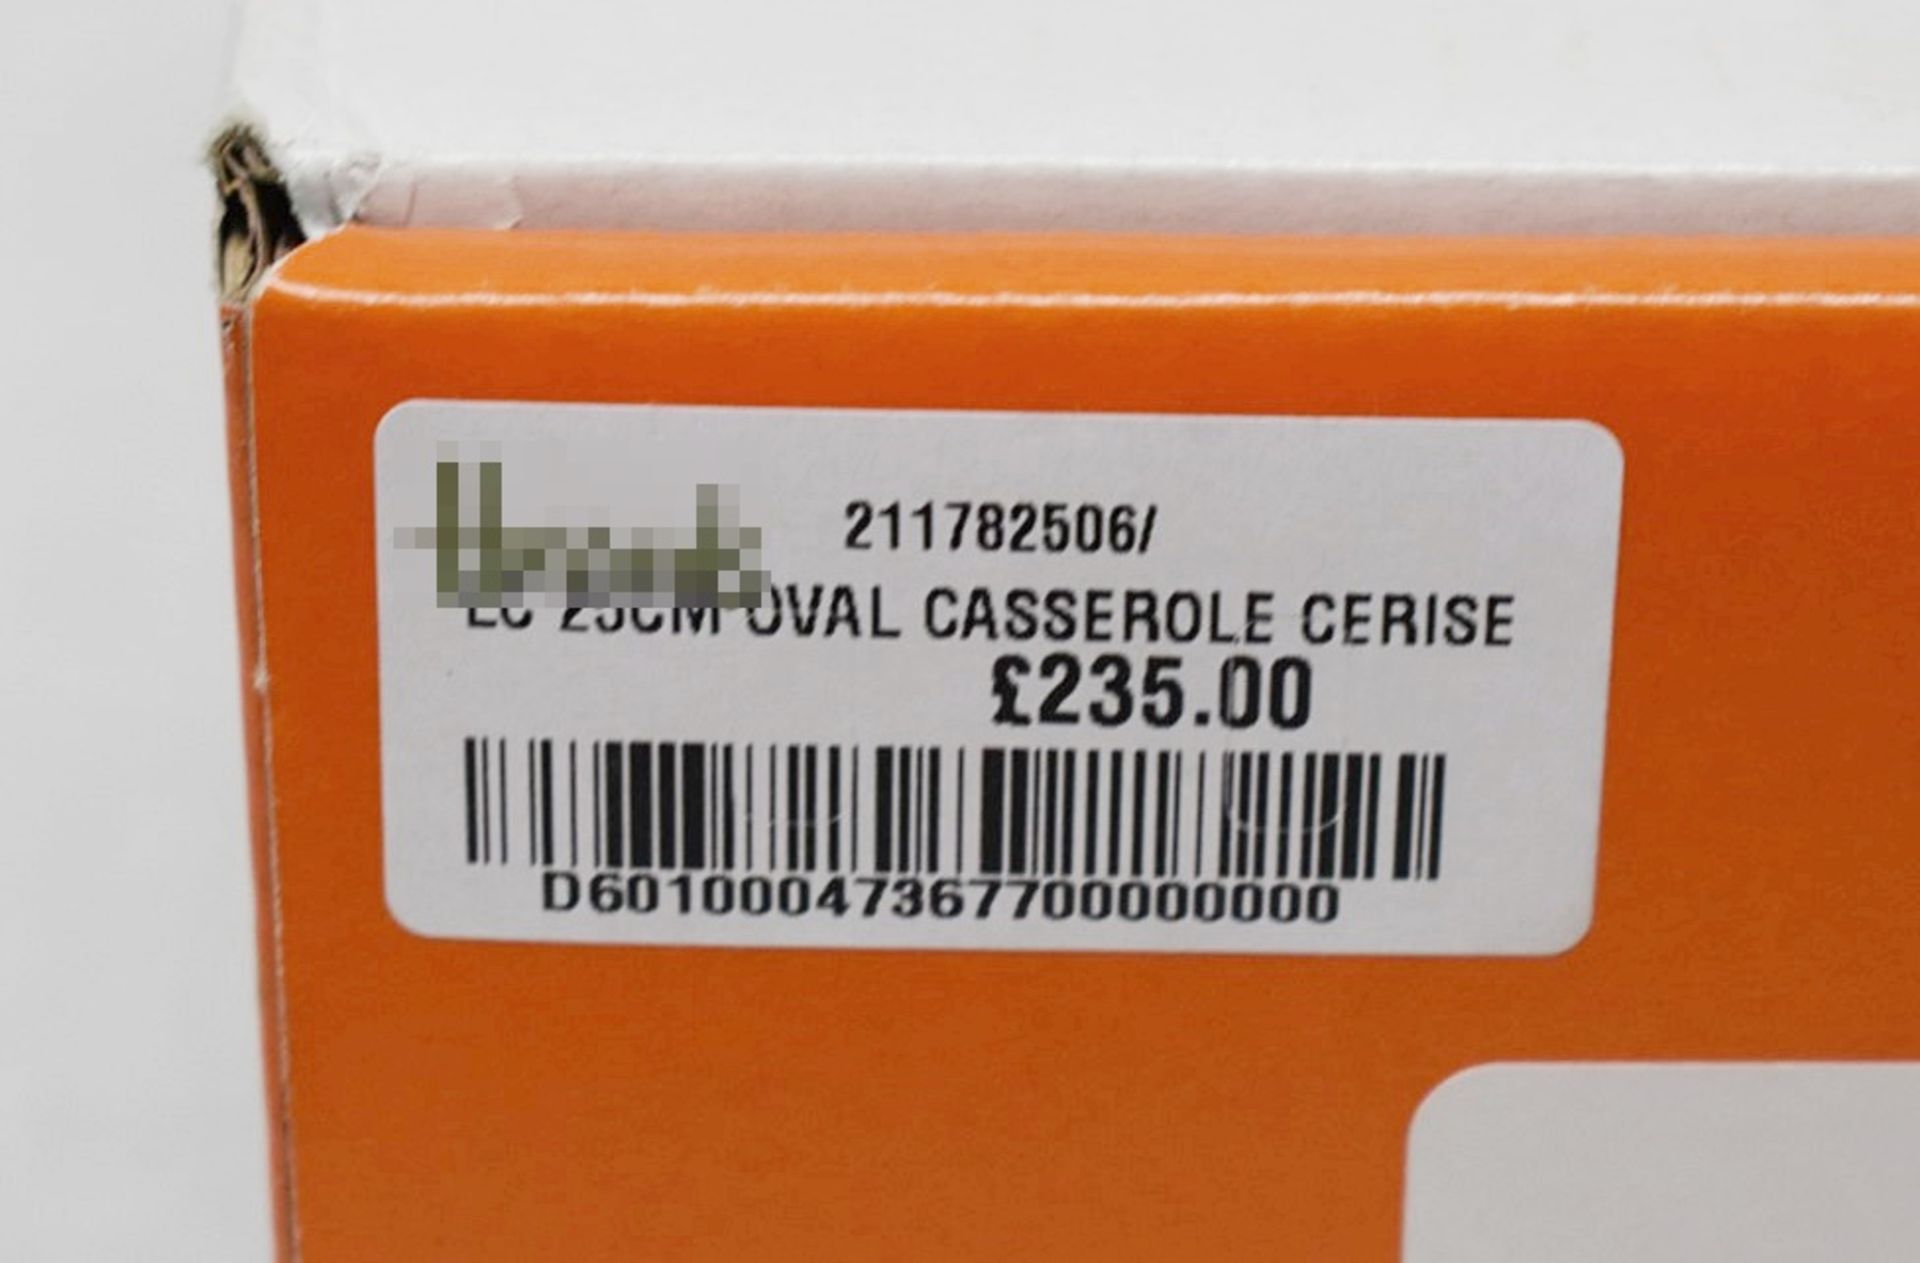 1 x LE CREUSET 'Signature' Enamelled Cast Iron 25cm Oval Casserole Dish In Cerise - RRP £235.00 - Image 5 of 11